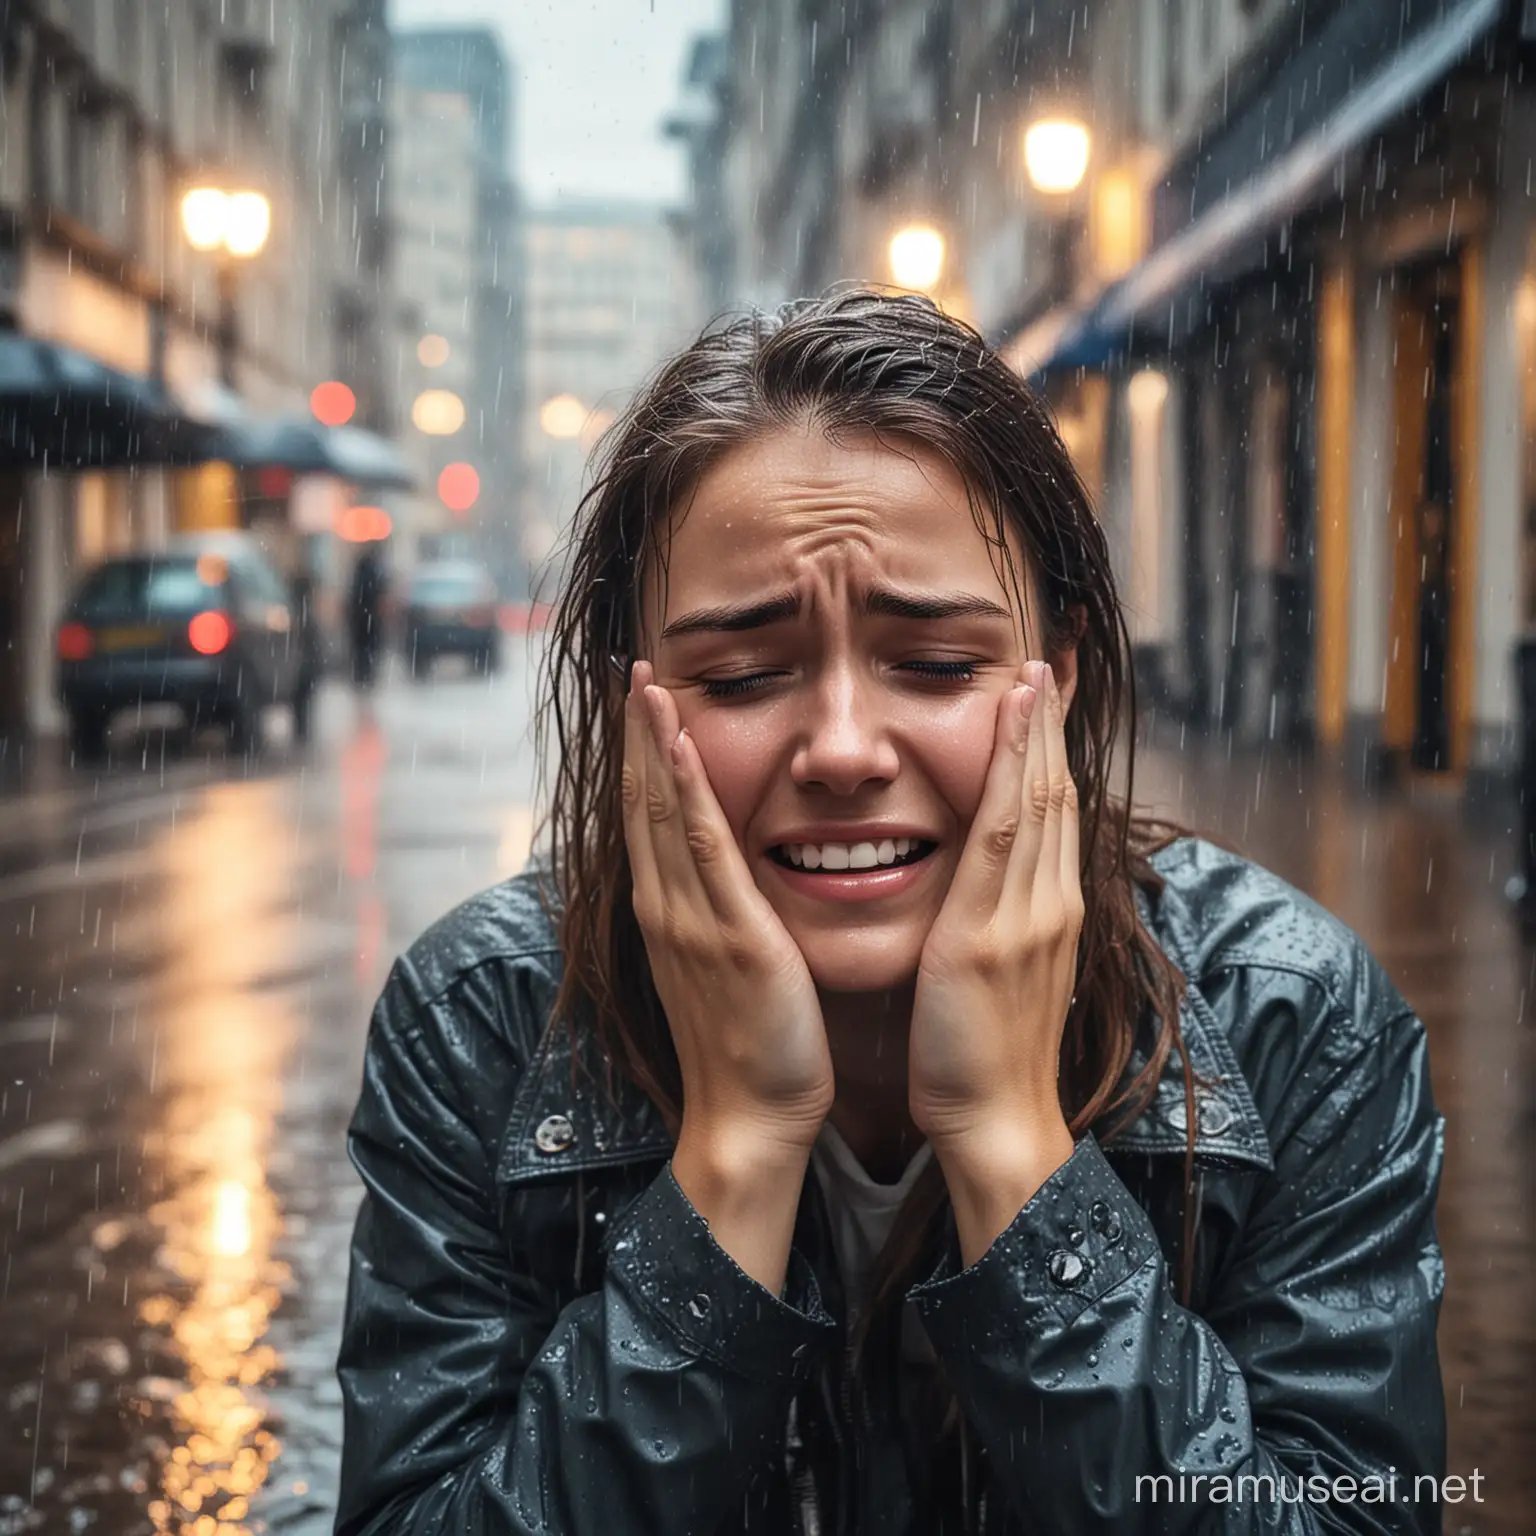 Emotional Young Woman in Rainy Urban Street Scene